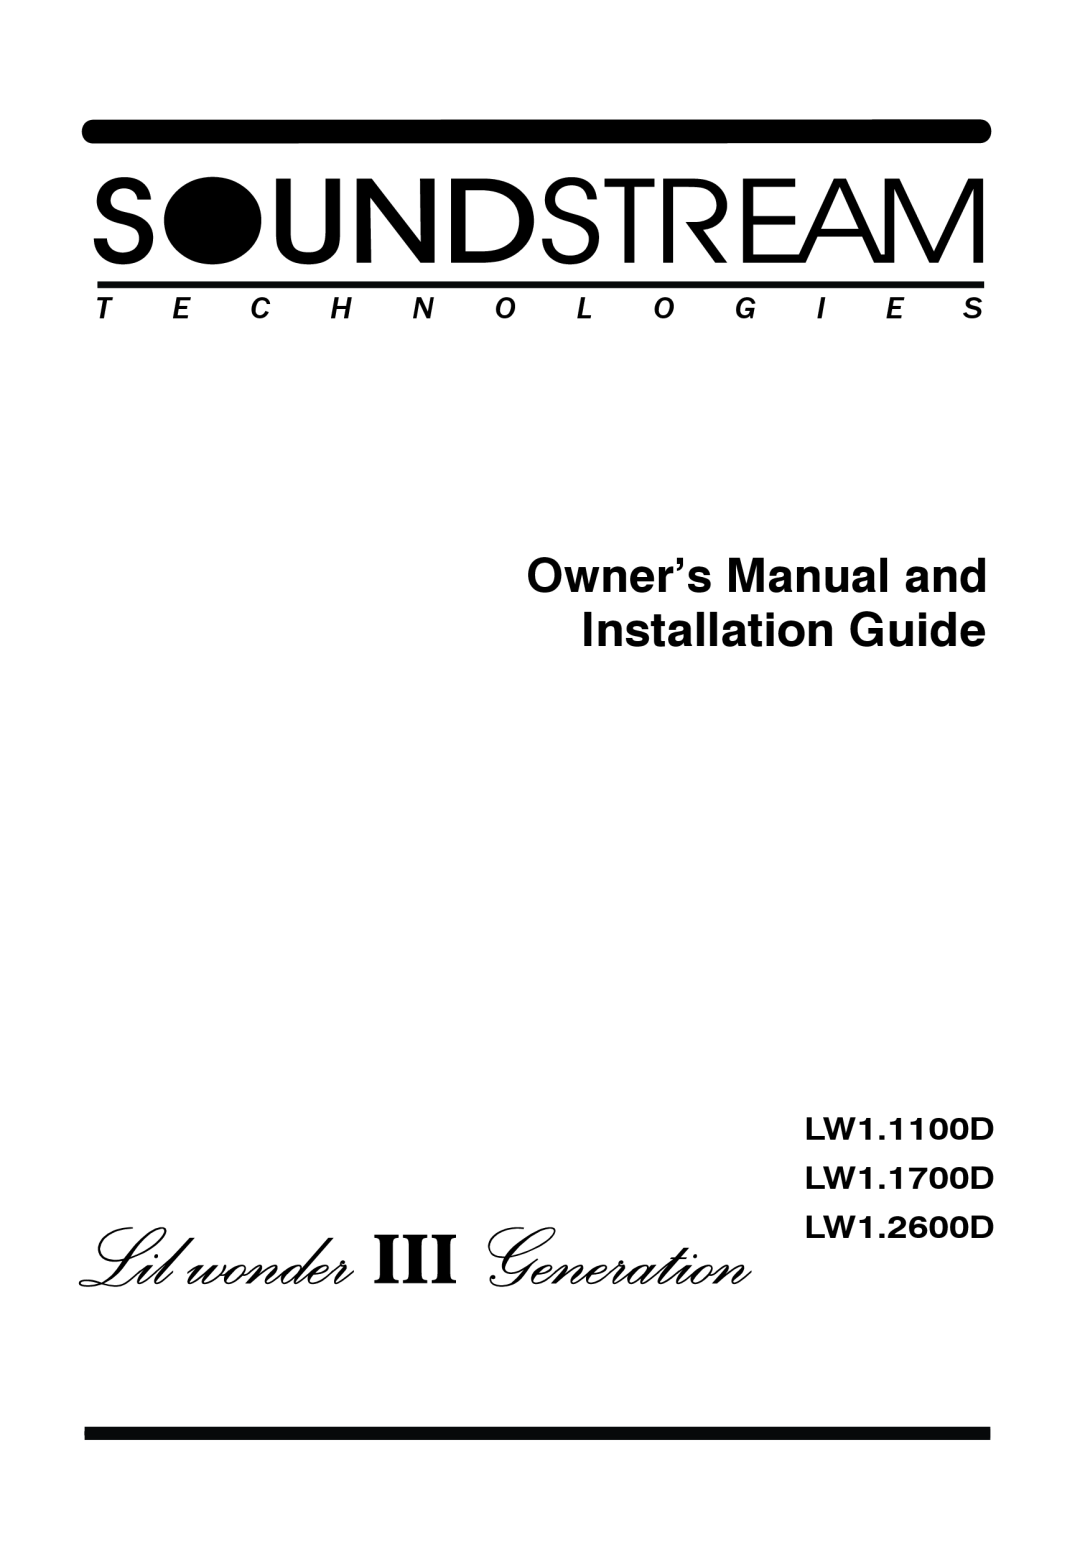 Soundstream Technologies owner manual LW1.1100D LW1.1700D LW1.2600D, T E C H N O L O G I E S 